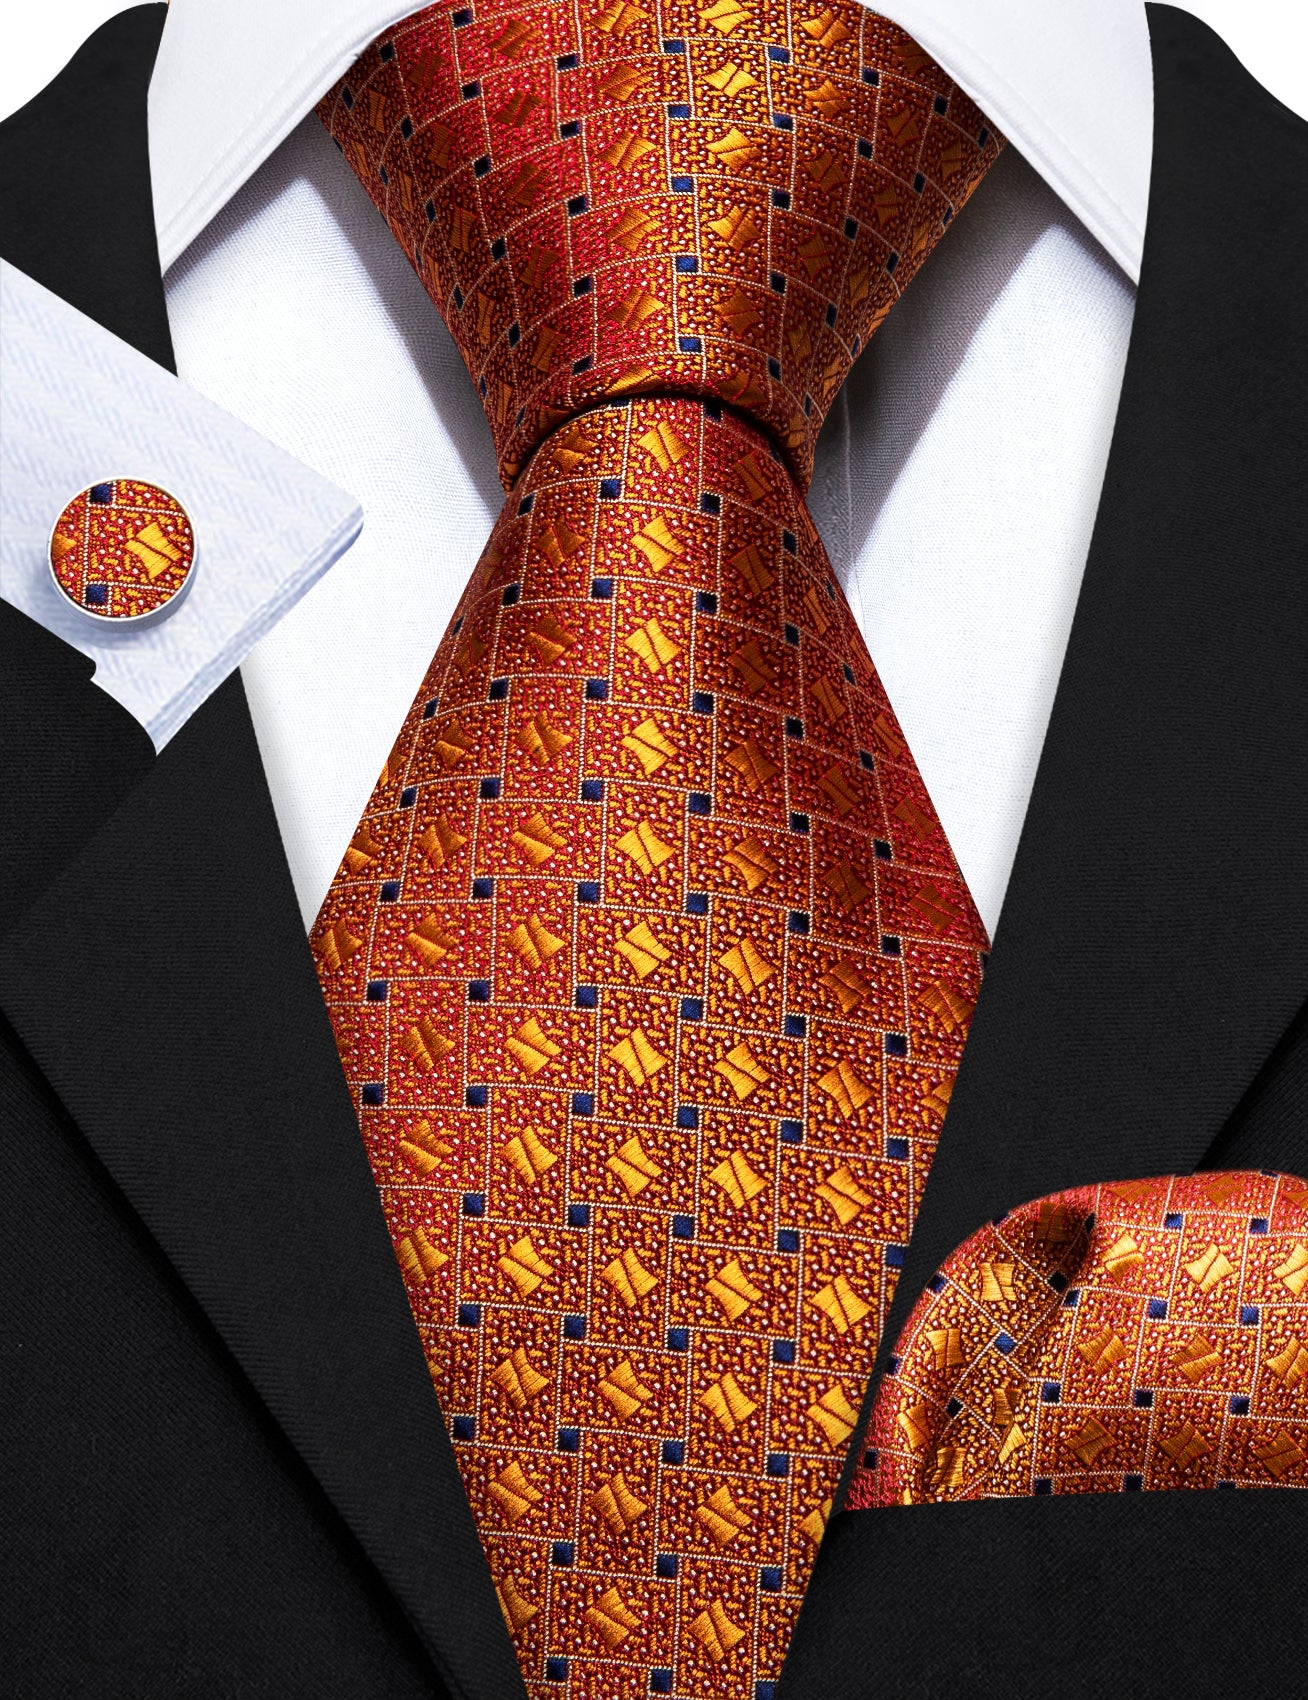 Barry.wang Orange Tie Novelty Blue Plaid Silk Tie Pocket Square Cufflinks Set